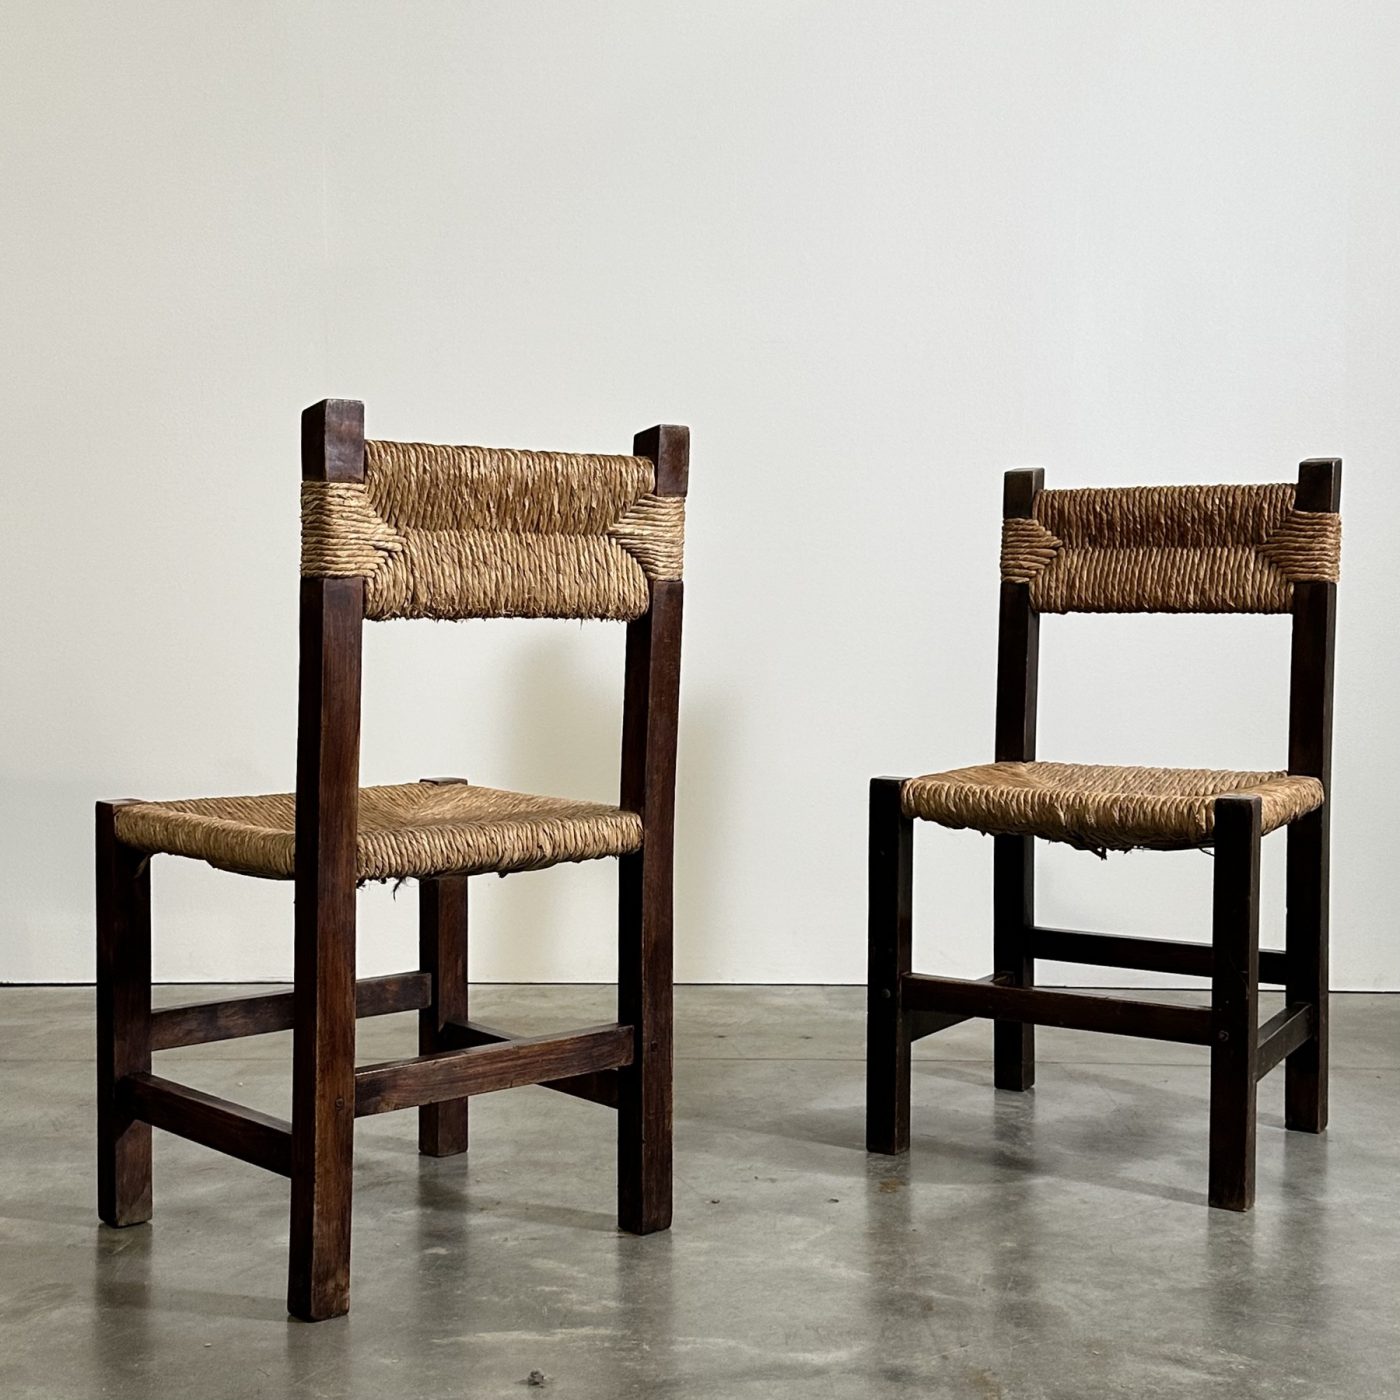 objet-vagabond-straw-chairs0005